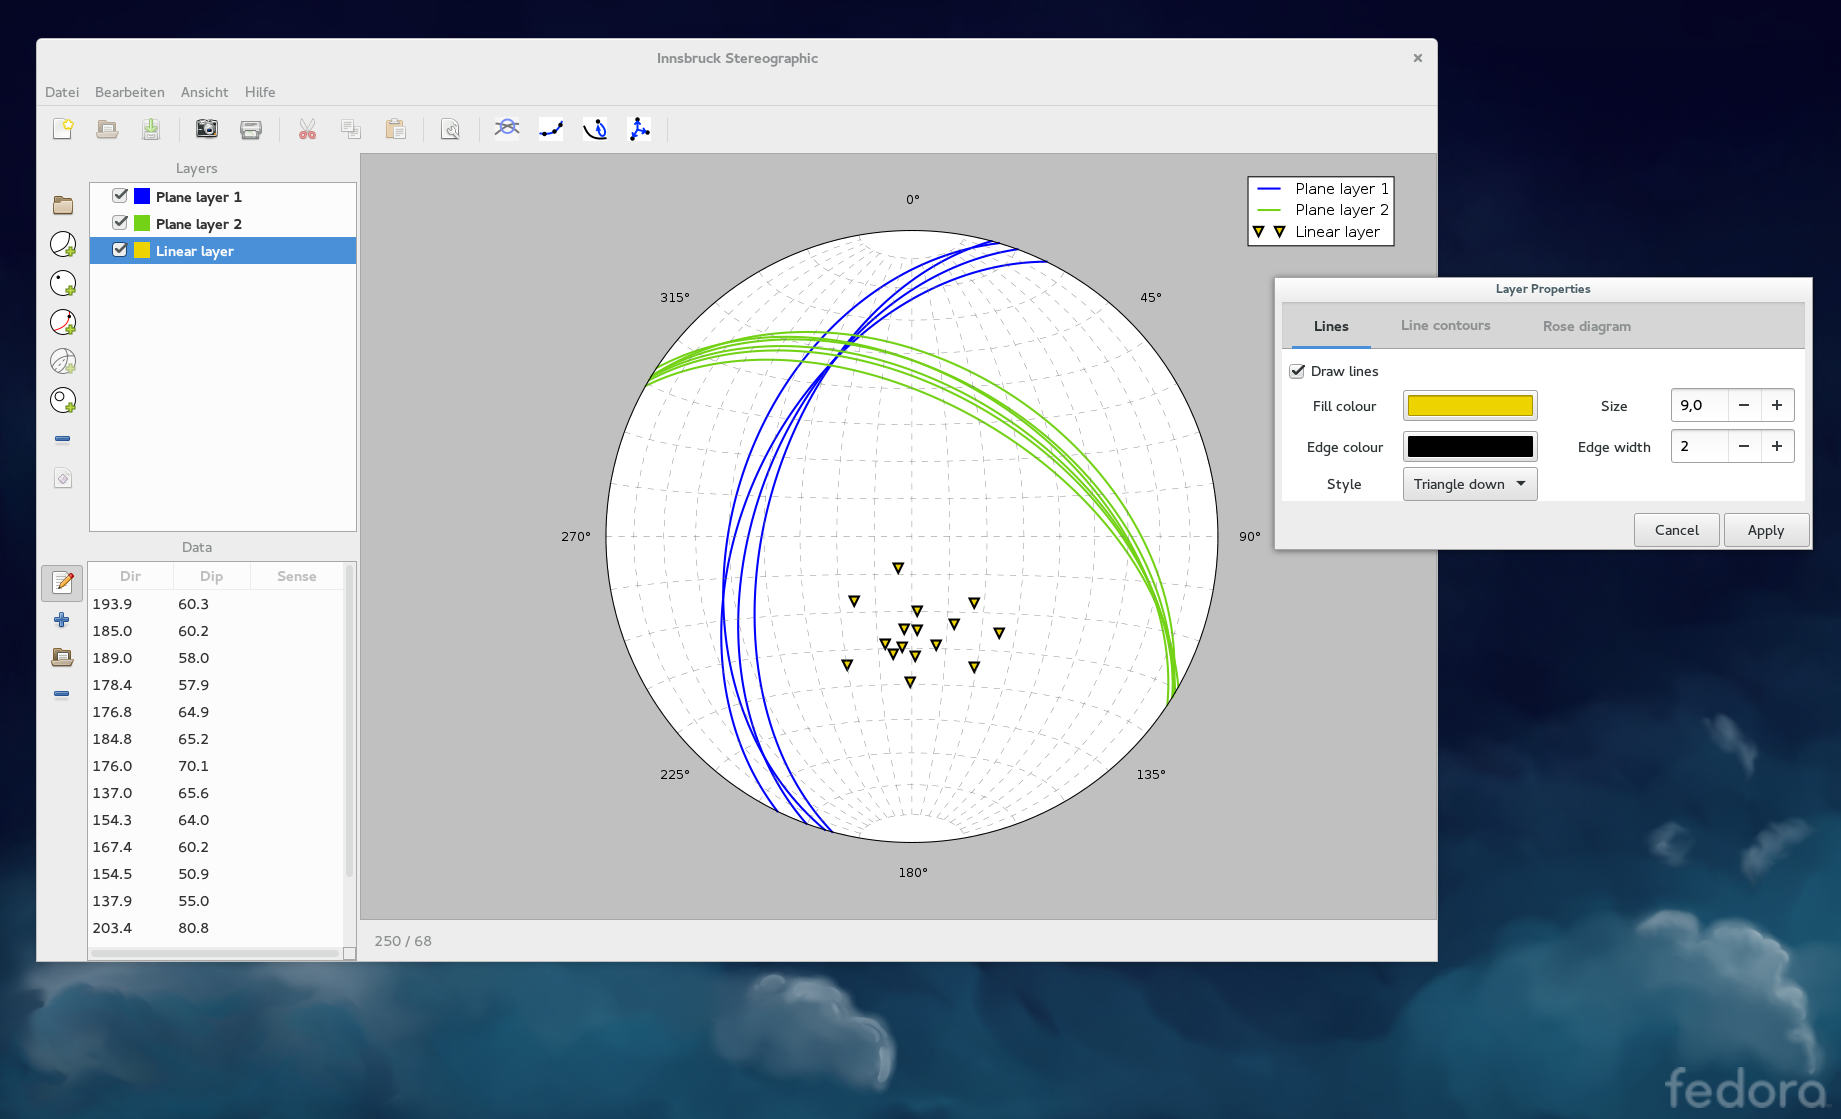 screenshot of Innsbruck Stereographic running on Fedora 21